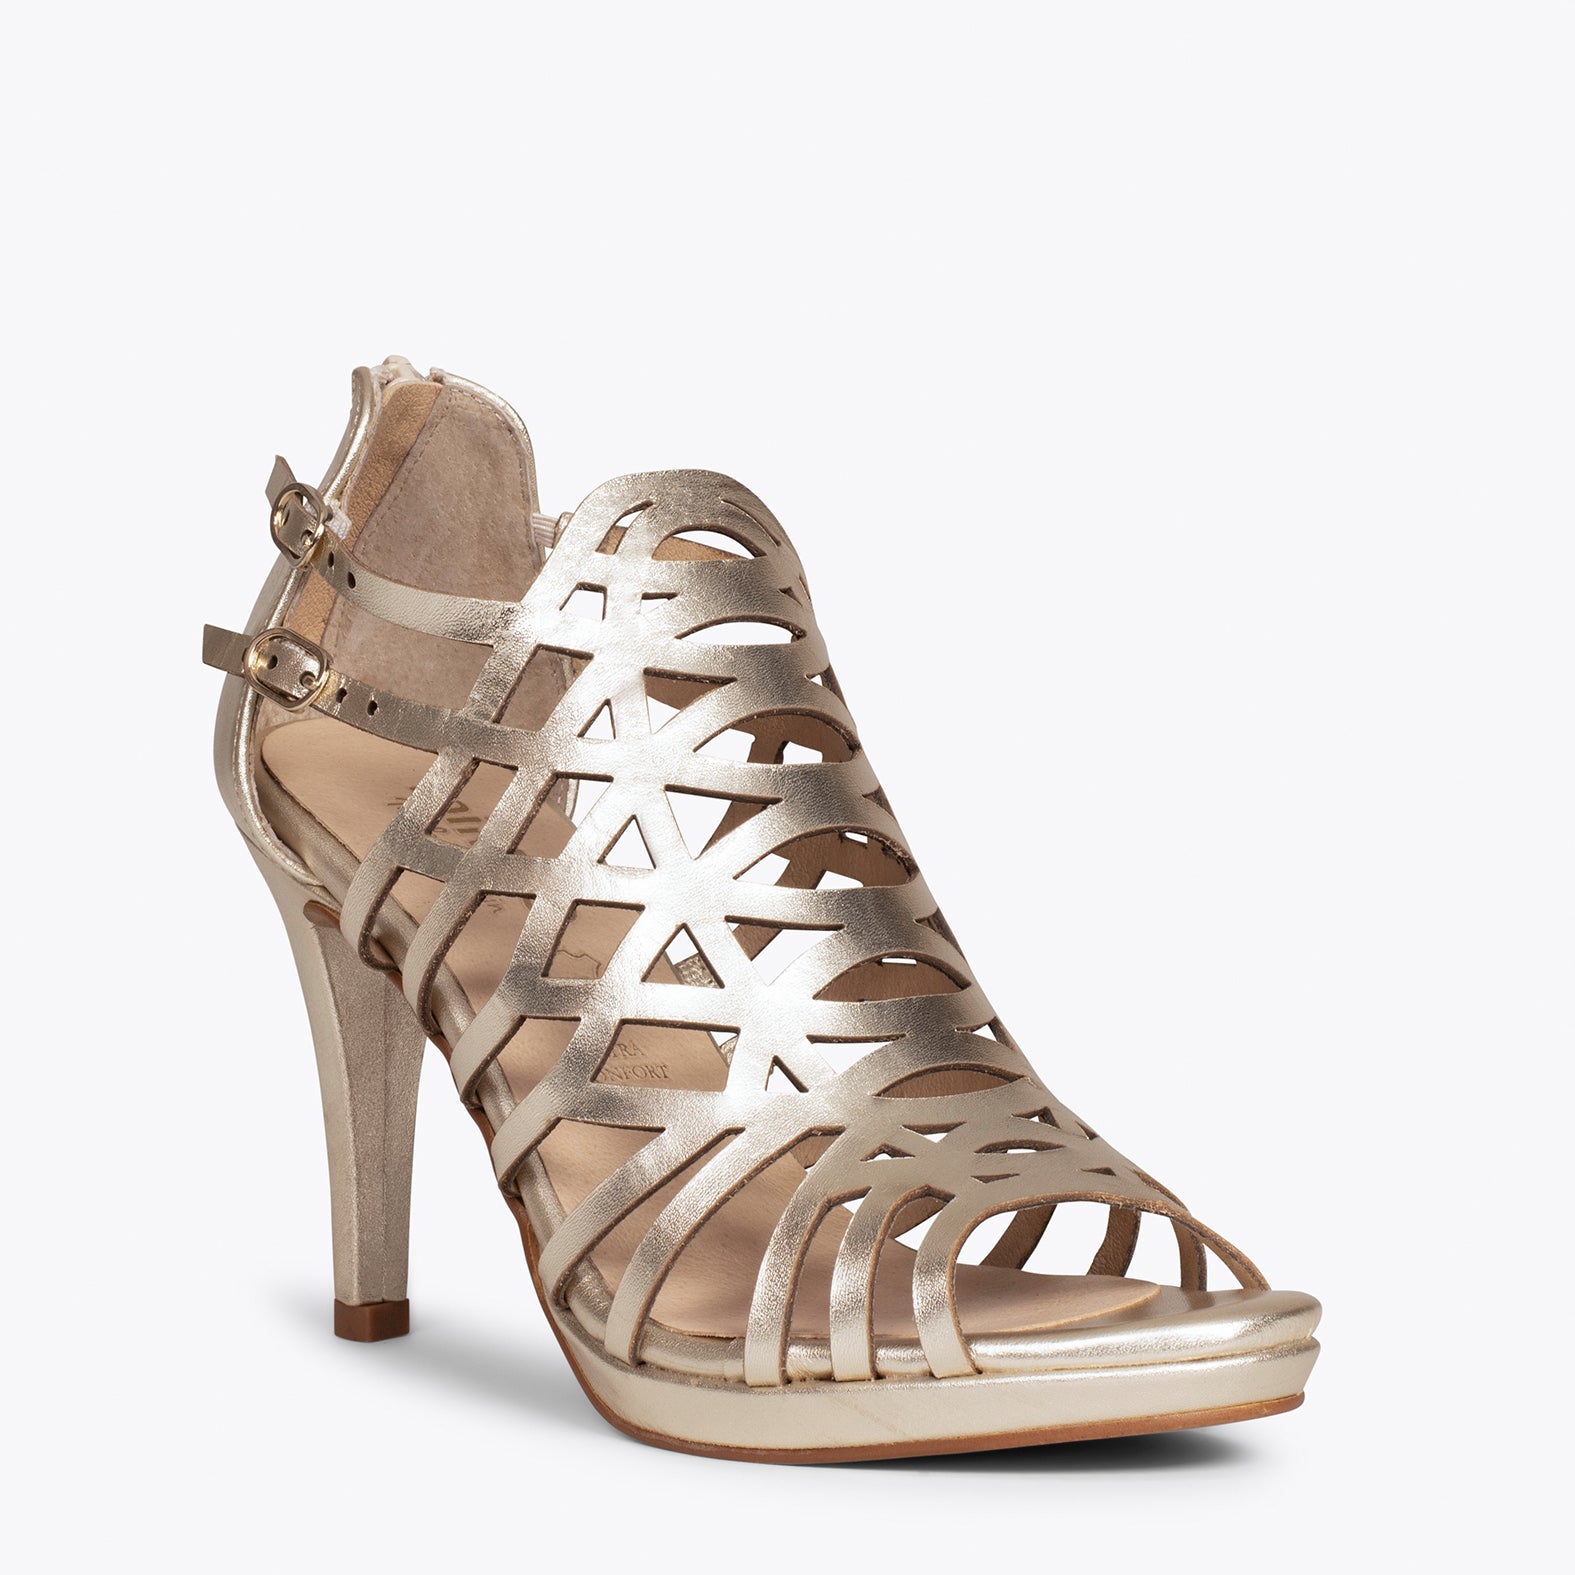 GALA – GOLDEN high heel party sandals